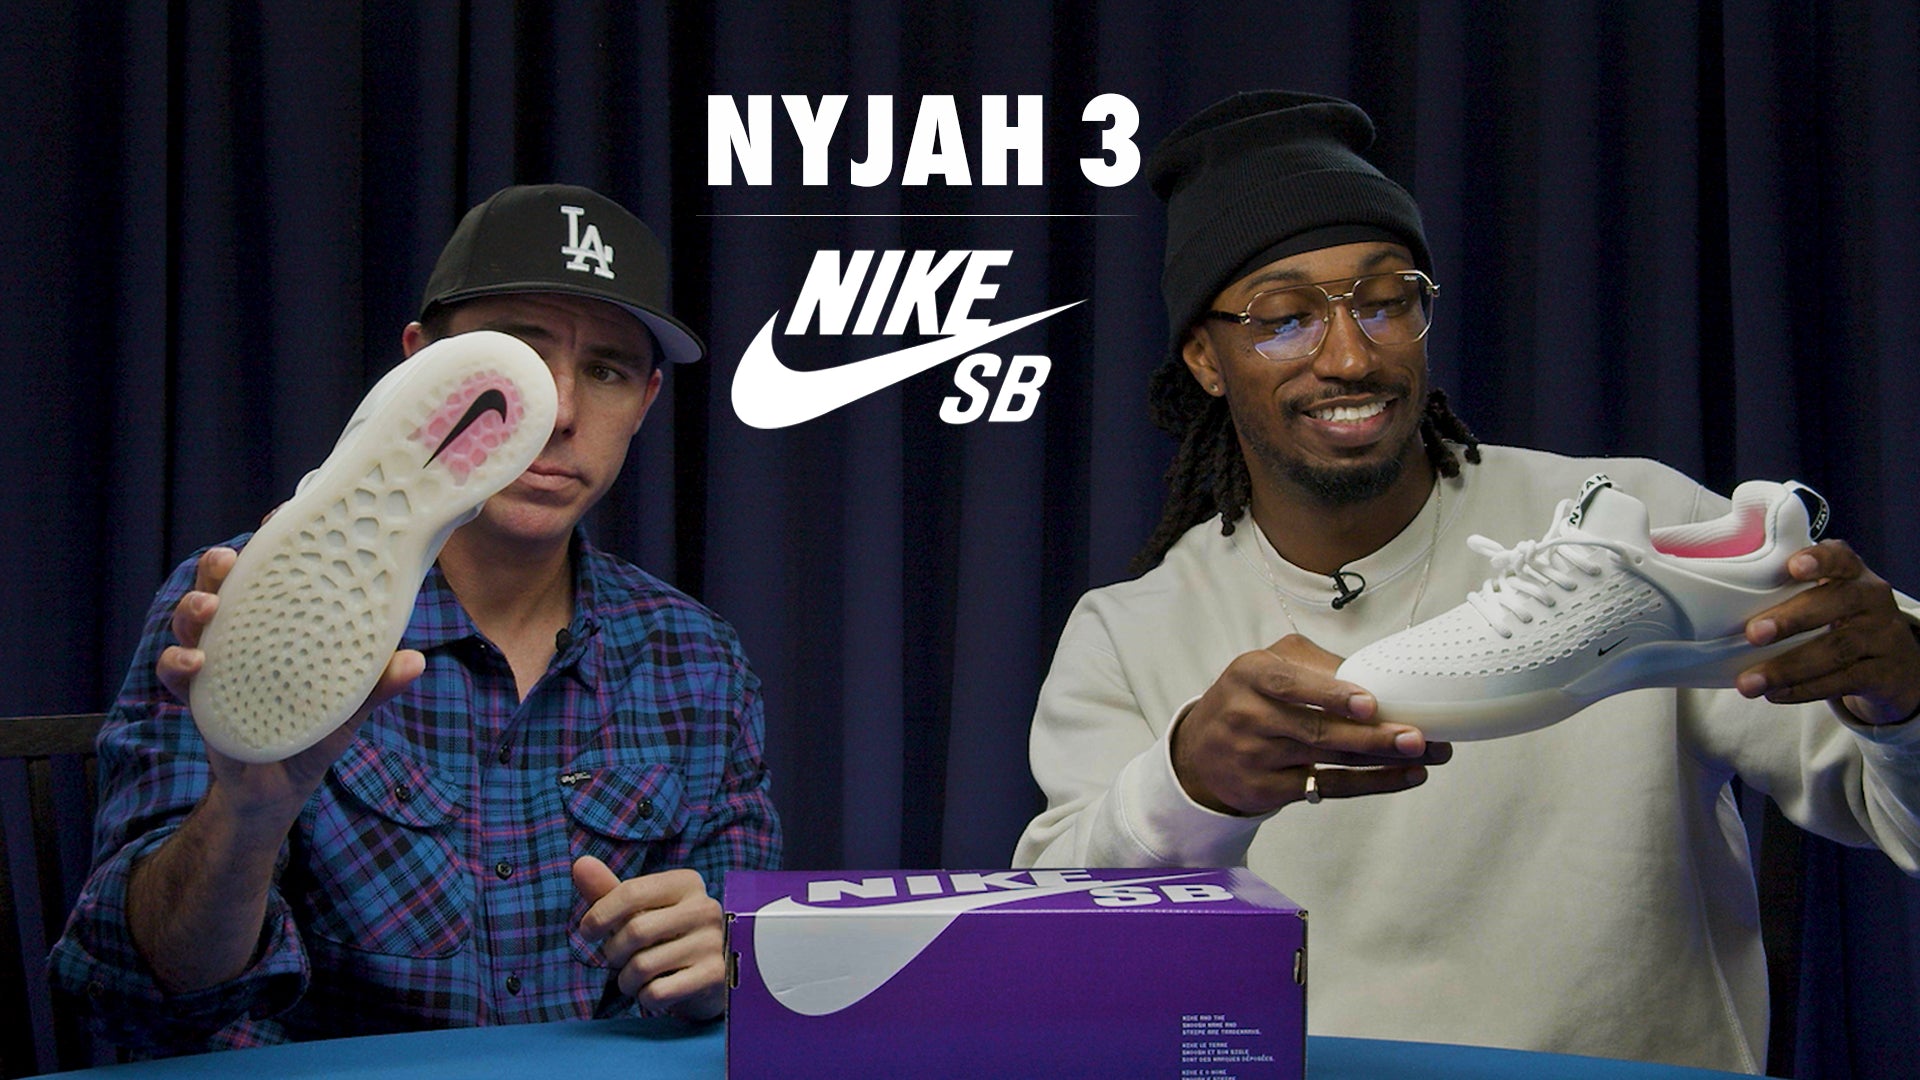 Nike SB - Nyjah 3 | Review